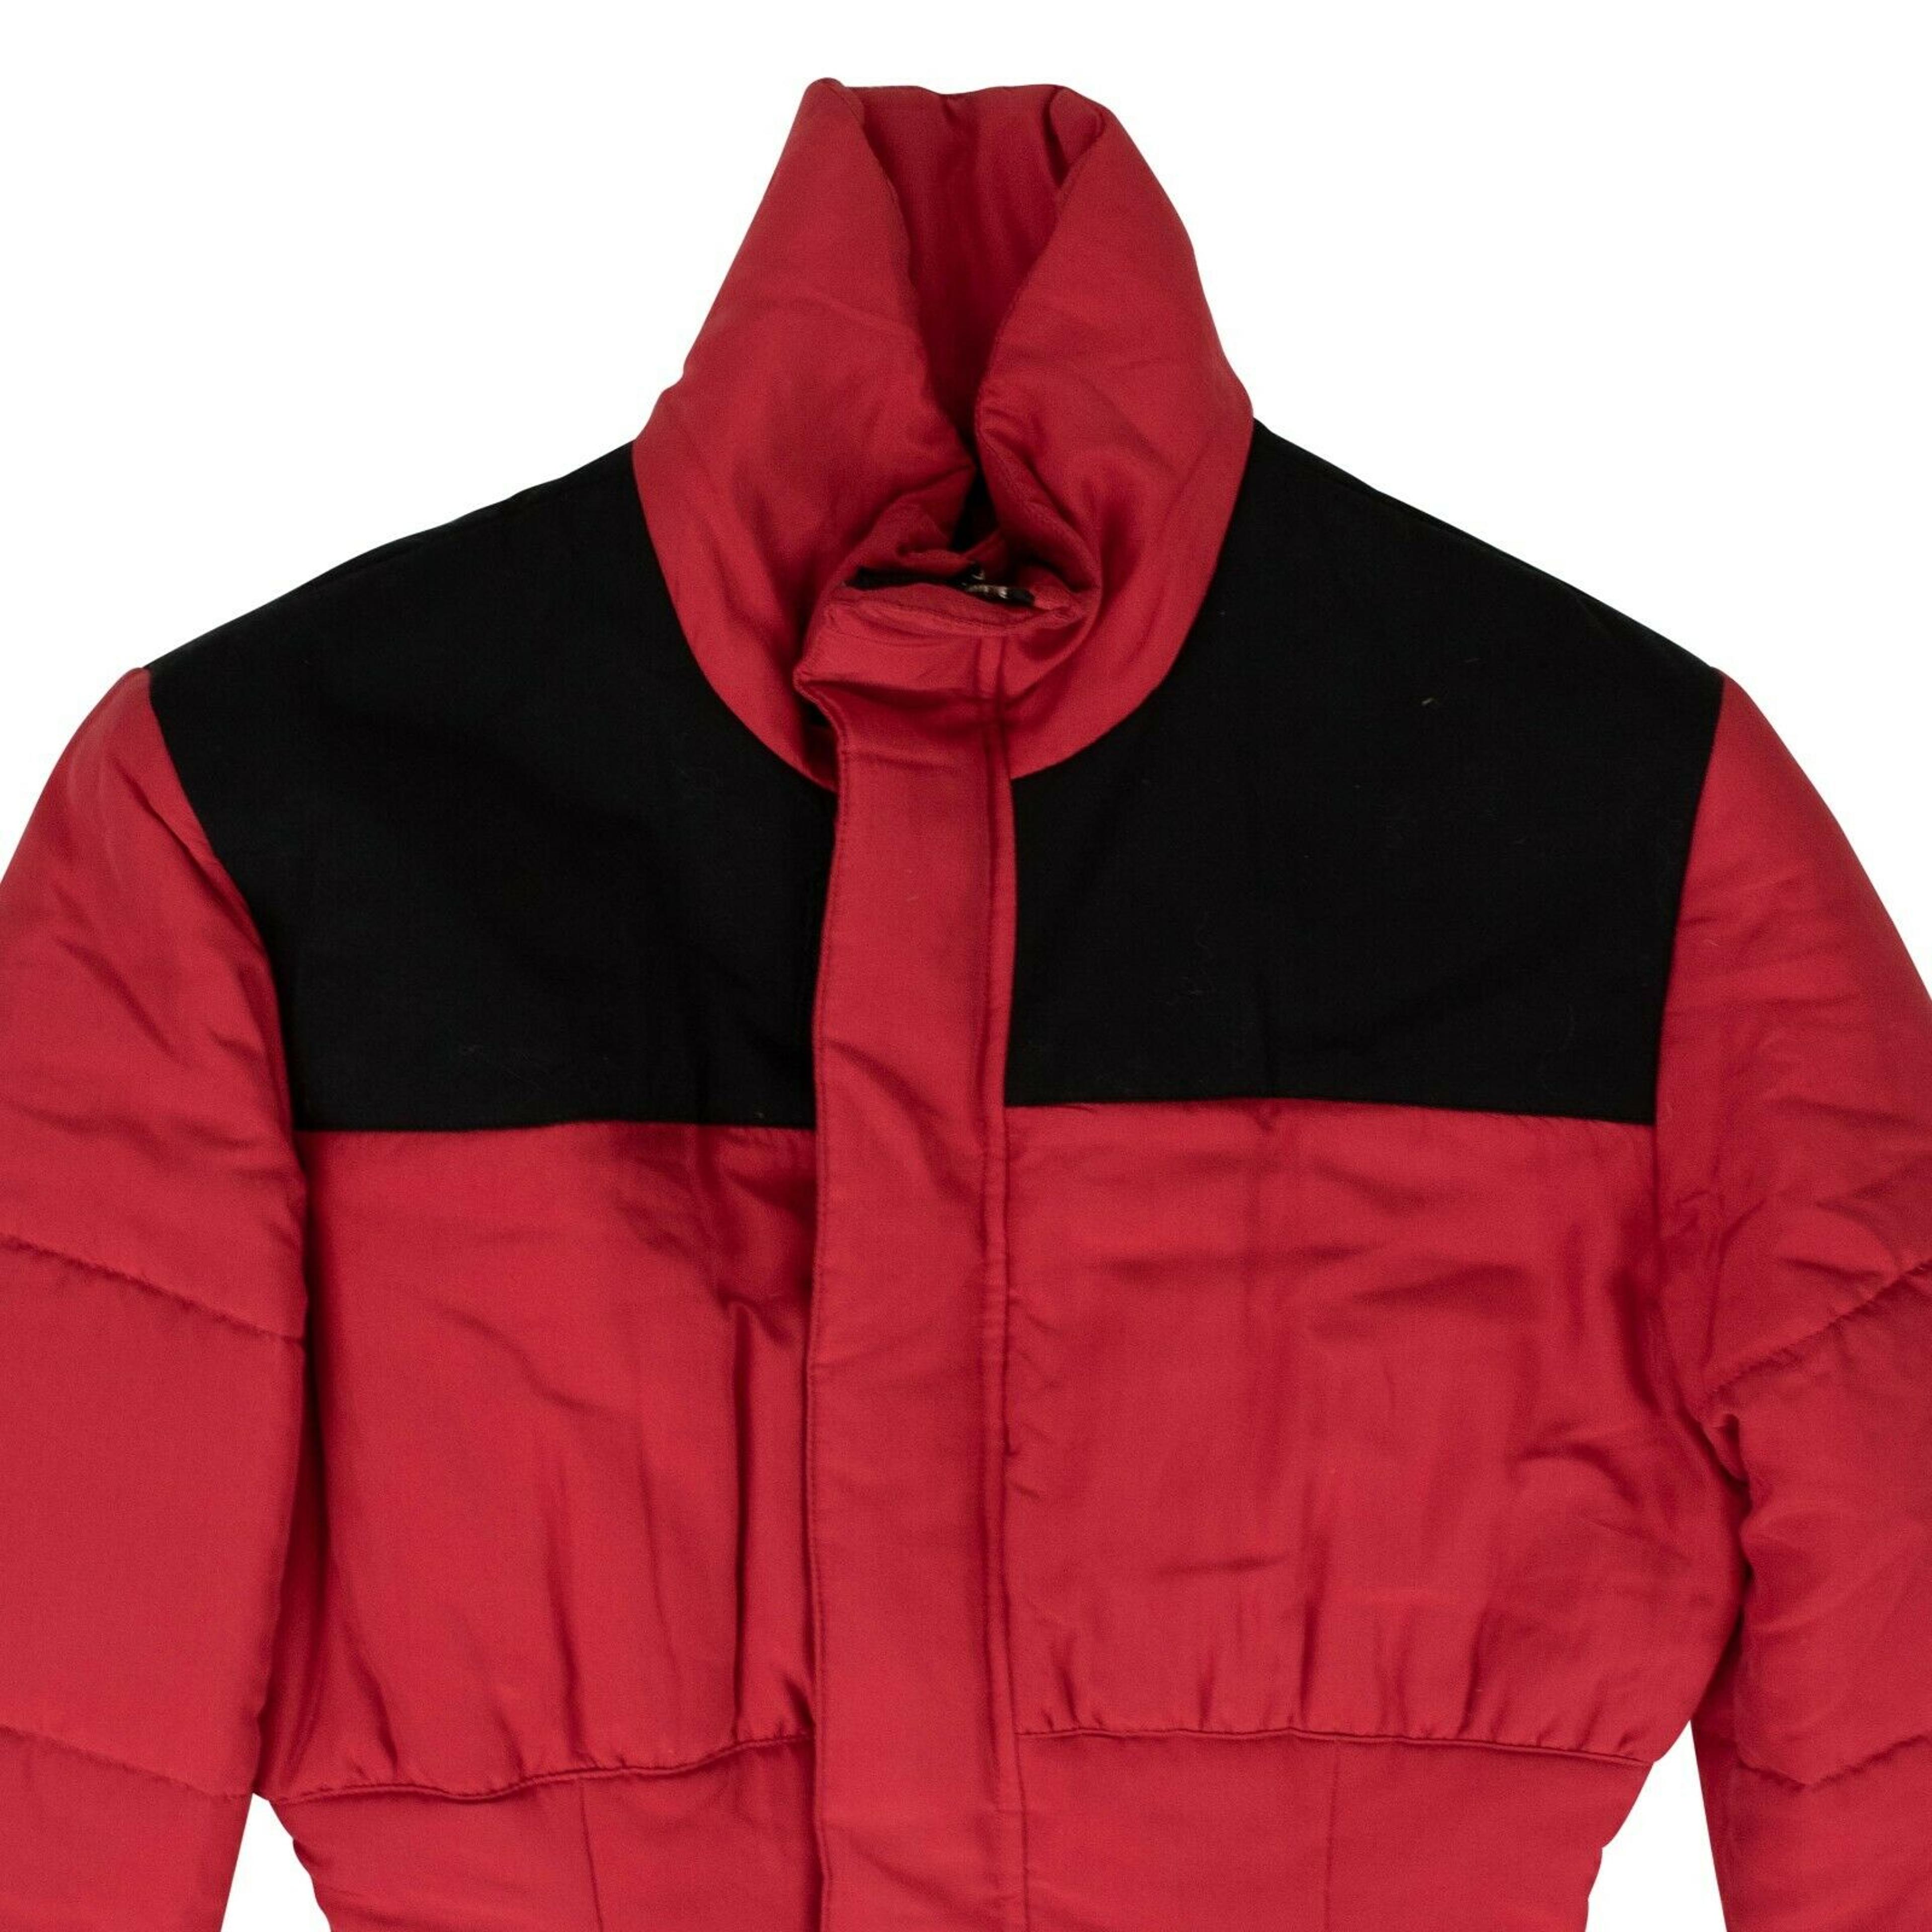 Alternate View 2 of Red Drawstring Waist Puffer Jacket